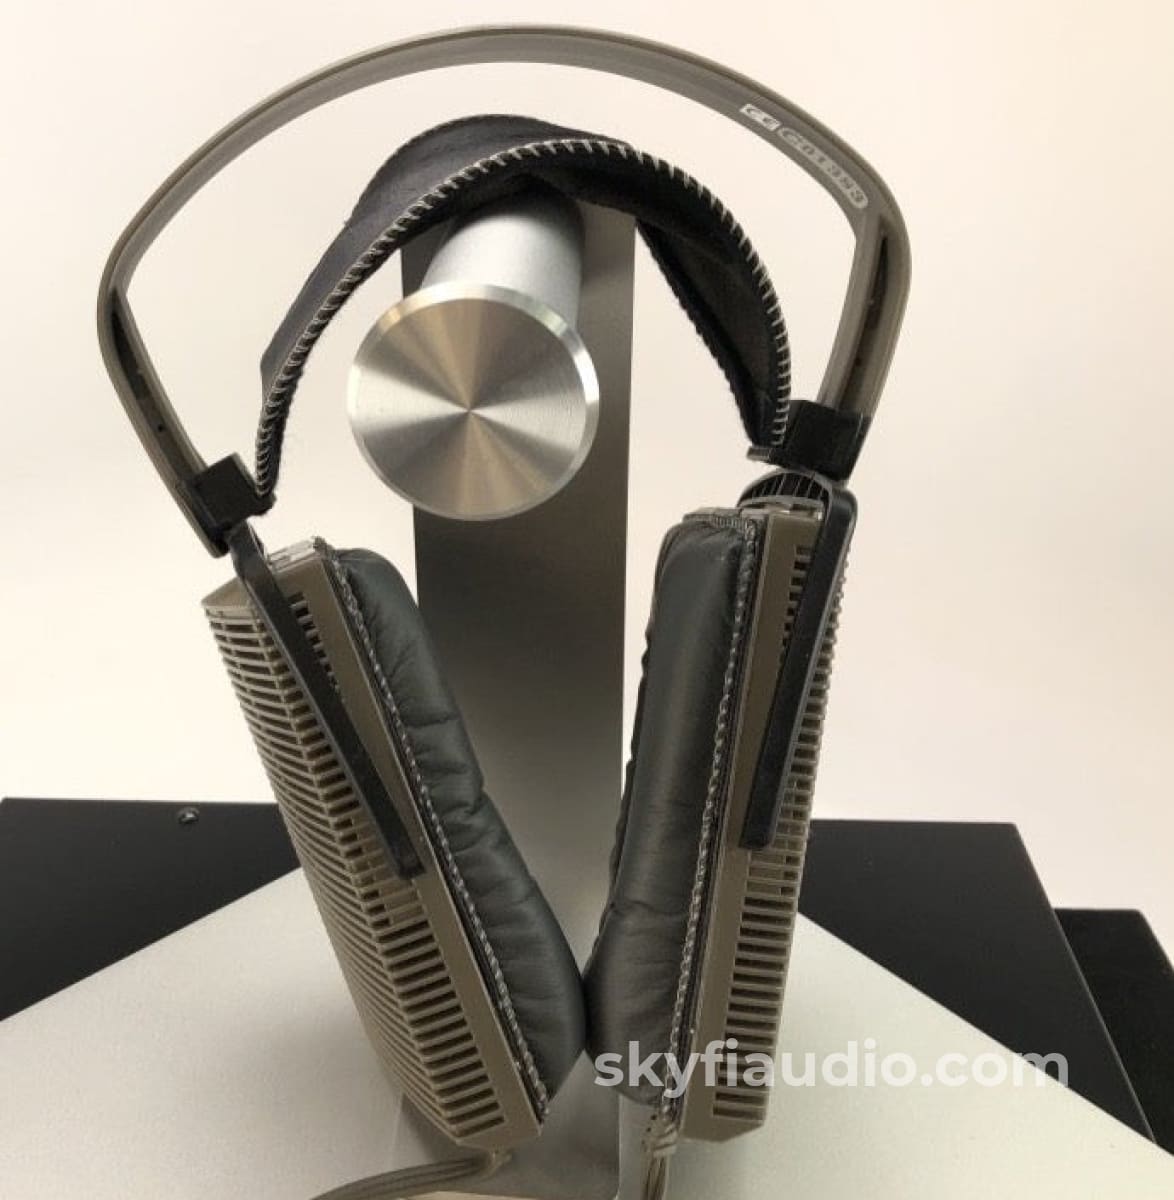 Stax Lambda Nova Classic Headphones With Srm-T1W Tube Amplifier